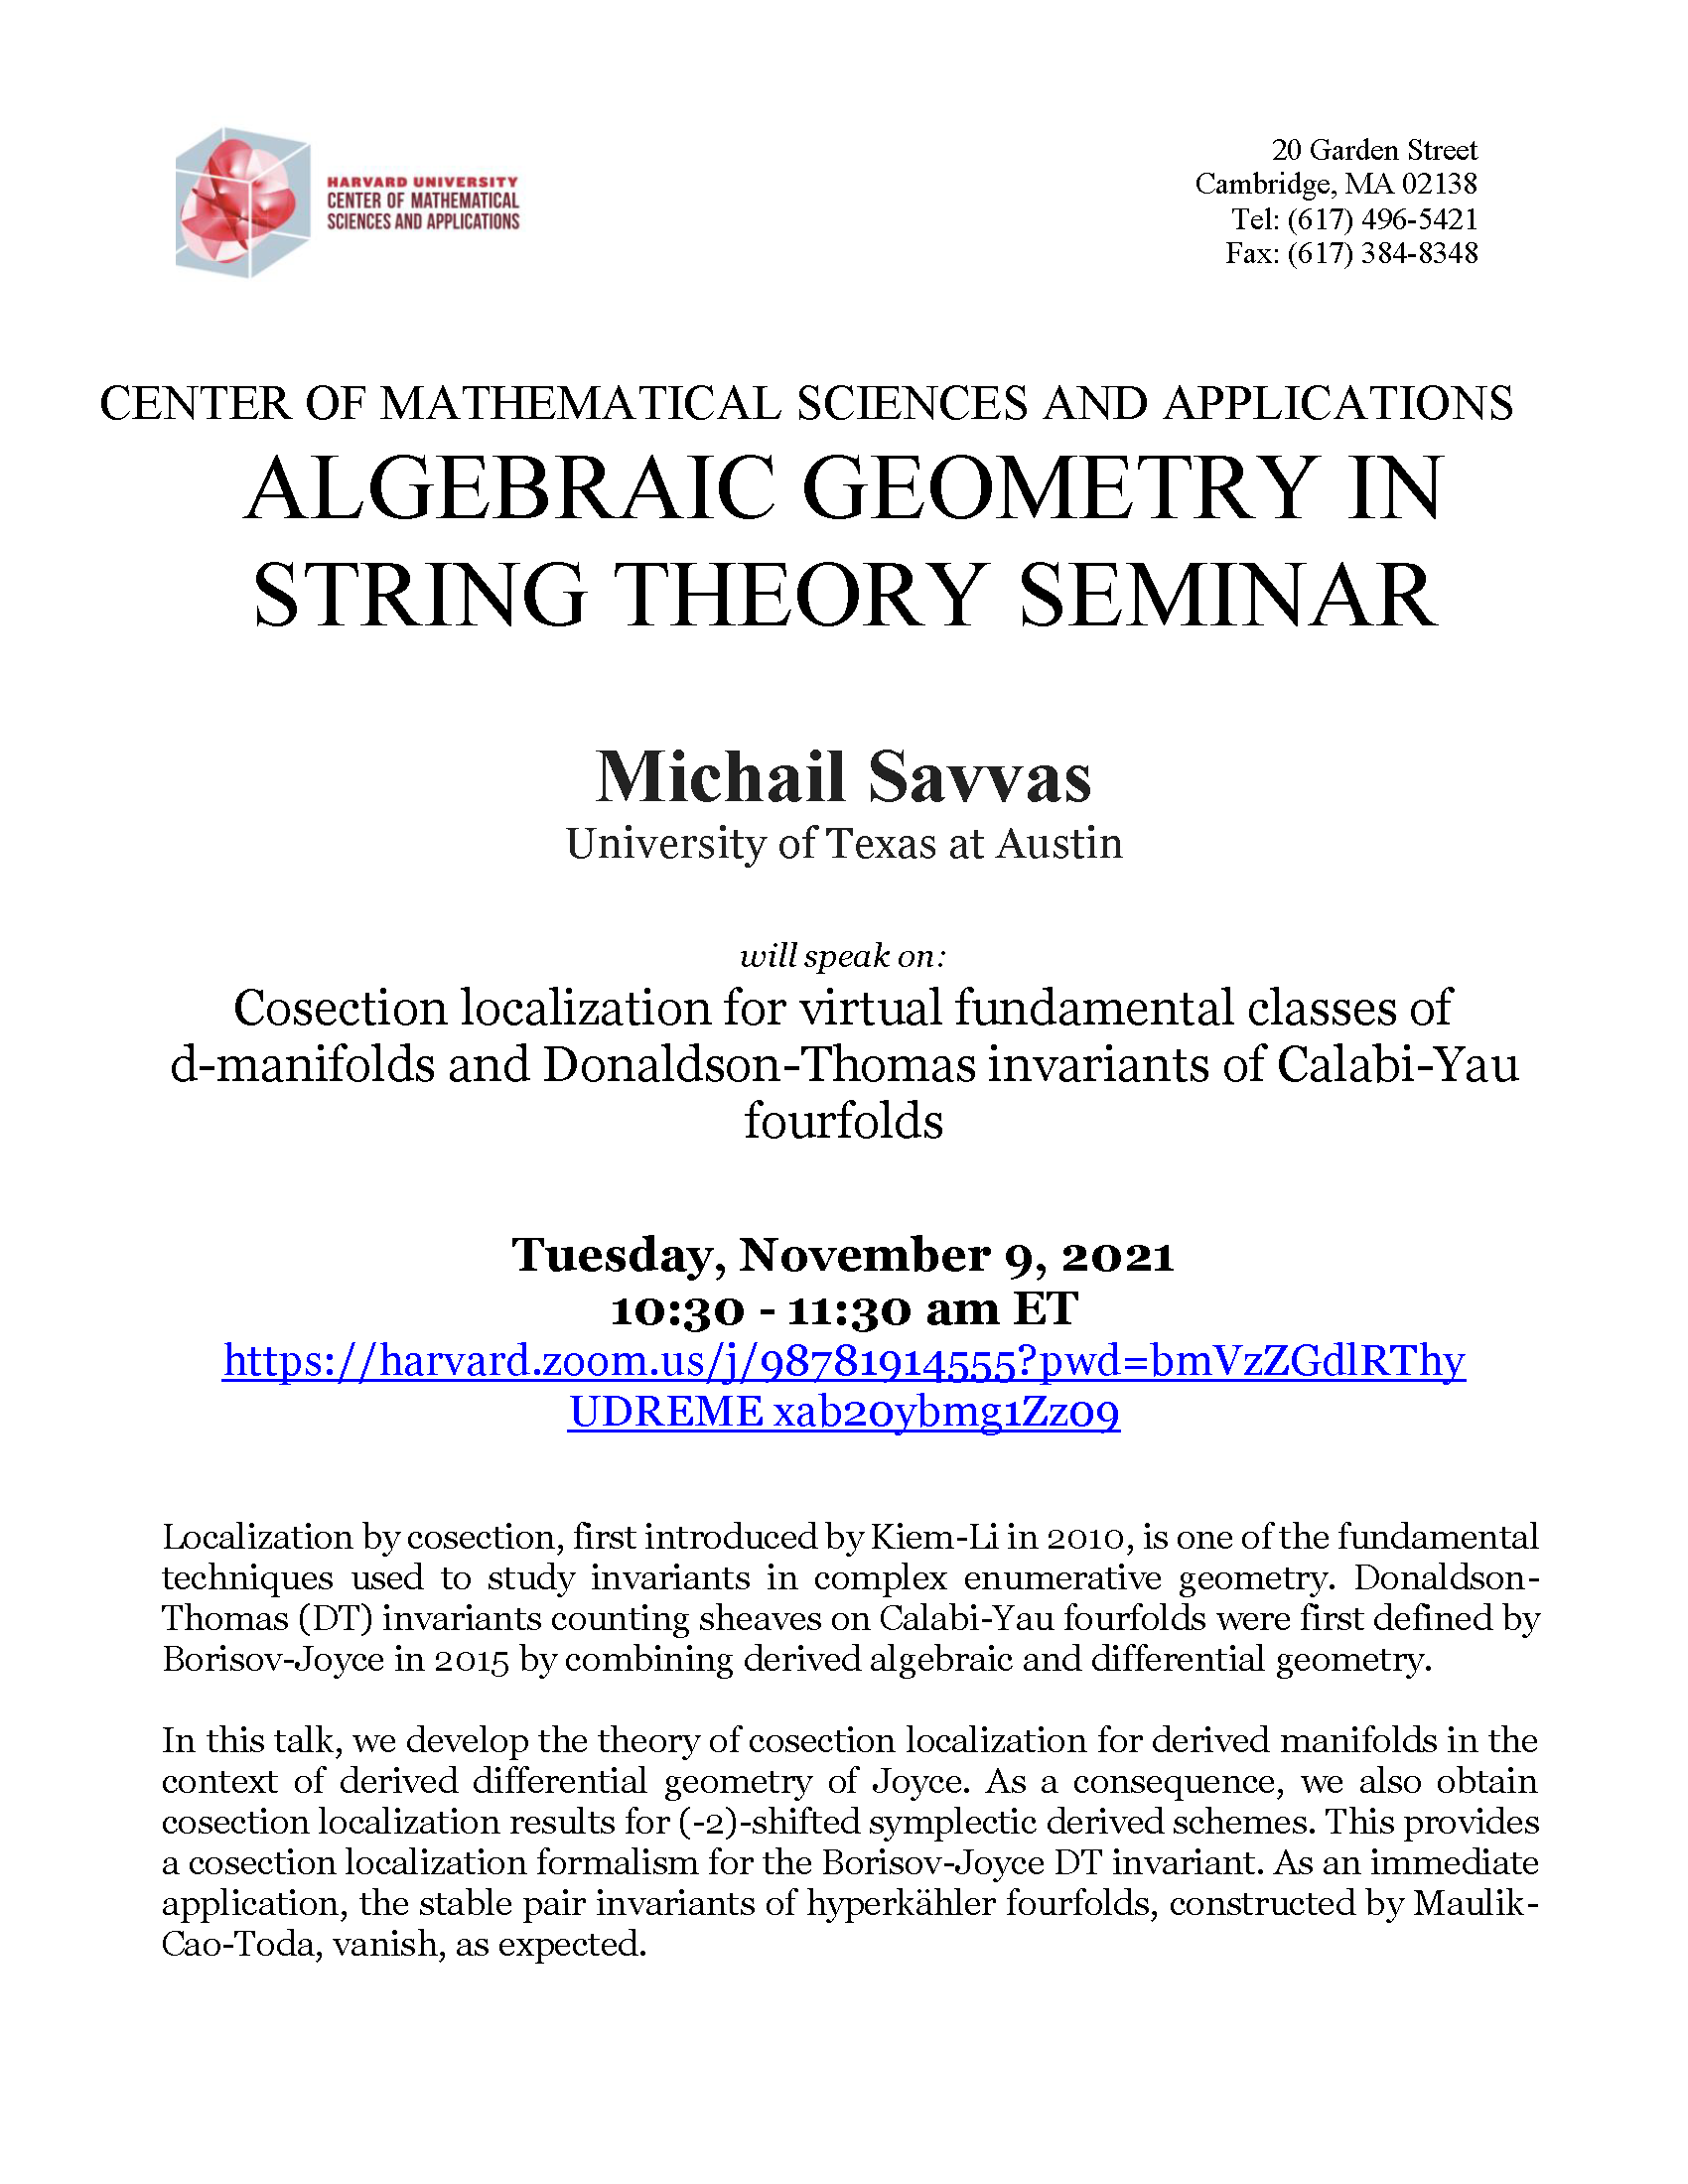 CMSA-Algebraic-Geometry-in-String-Theory-Seminar-11.09.21